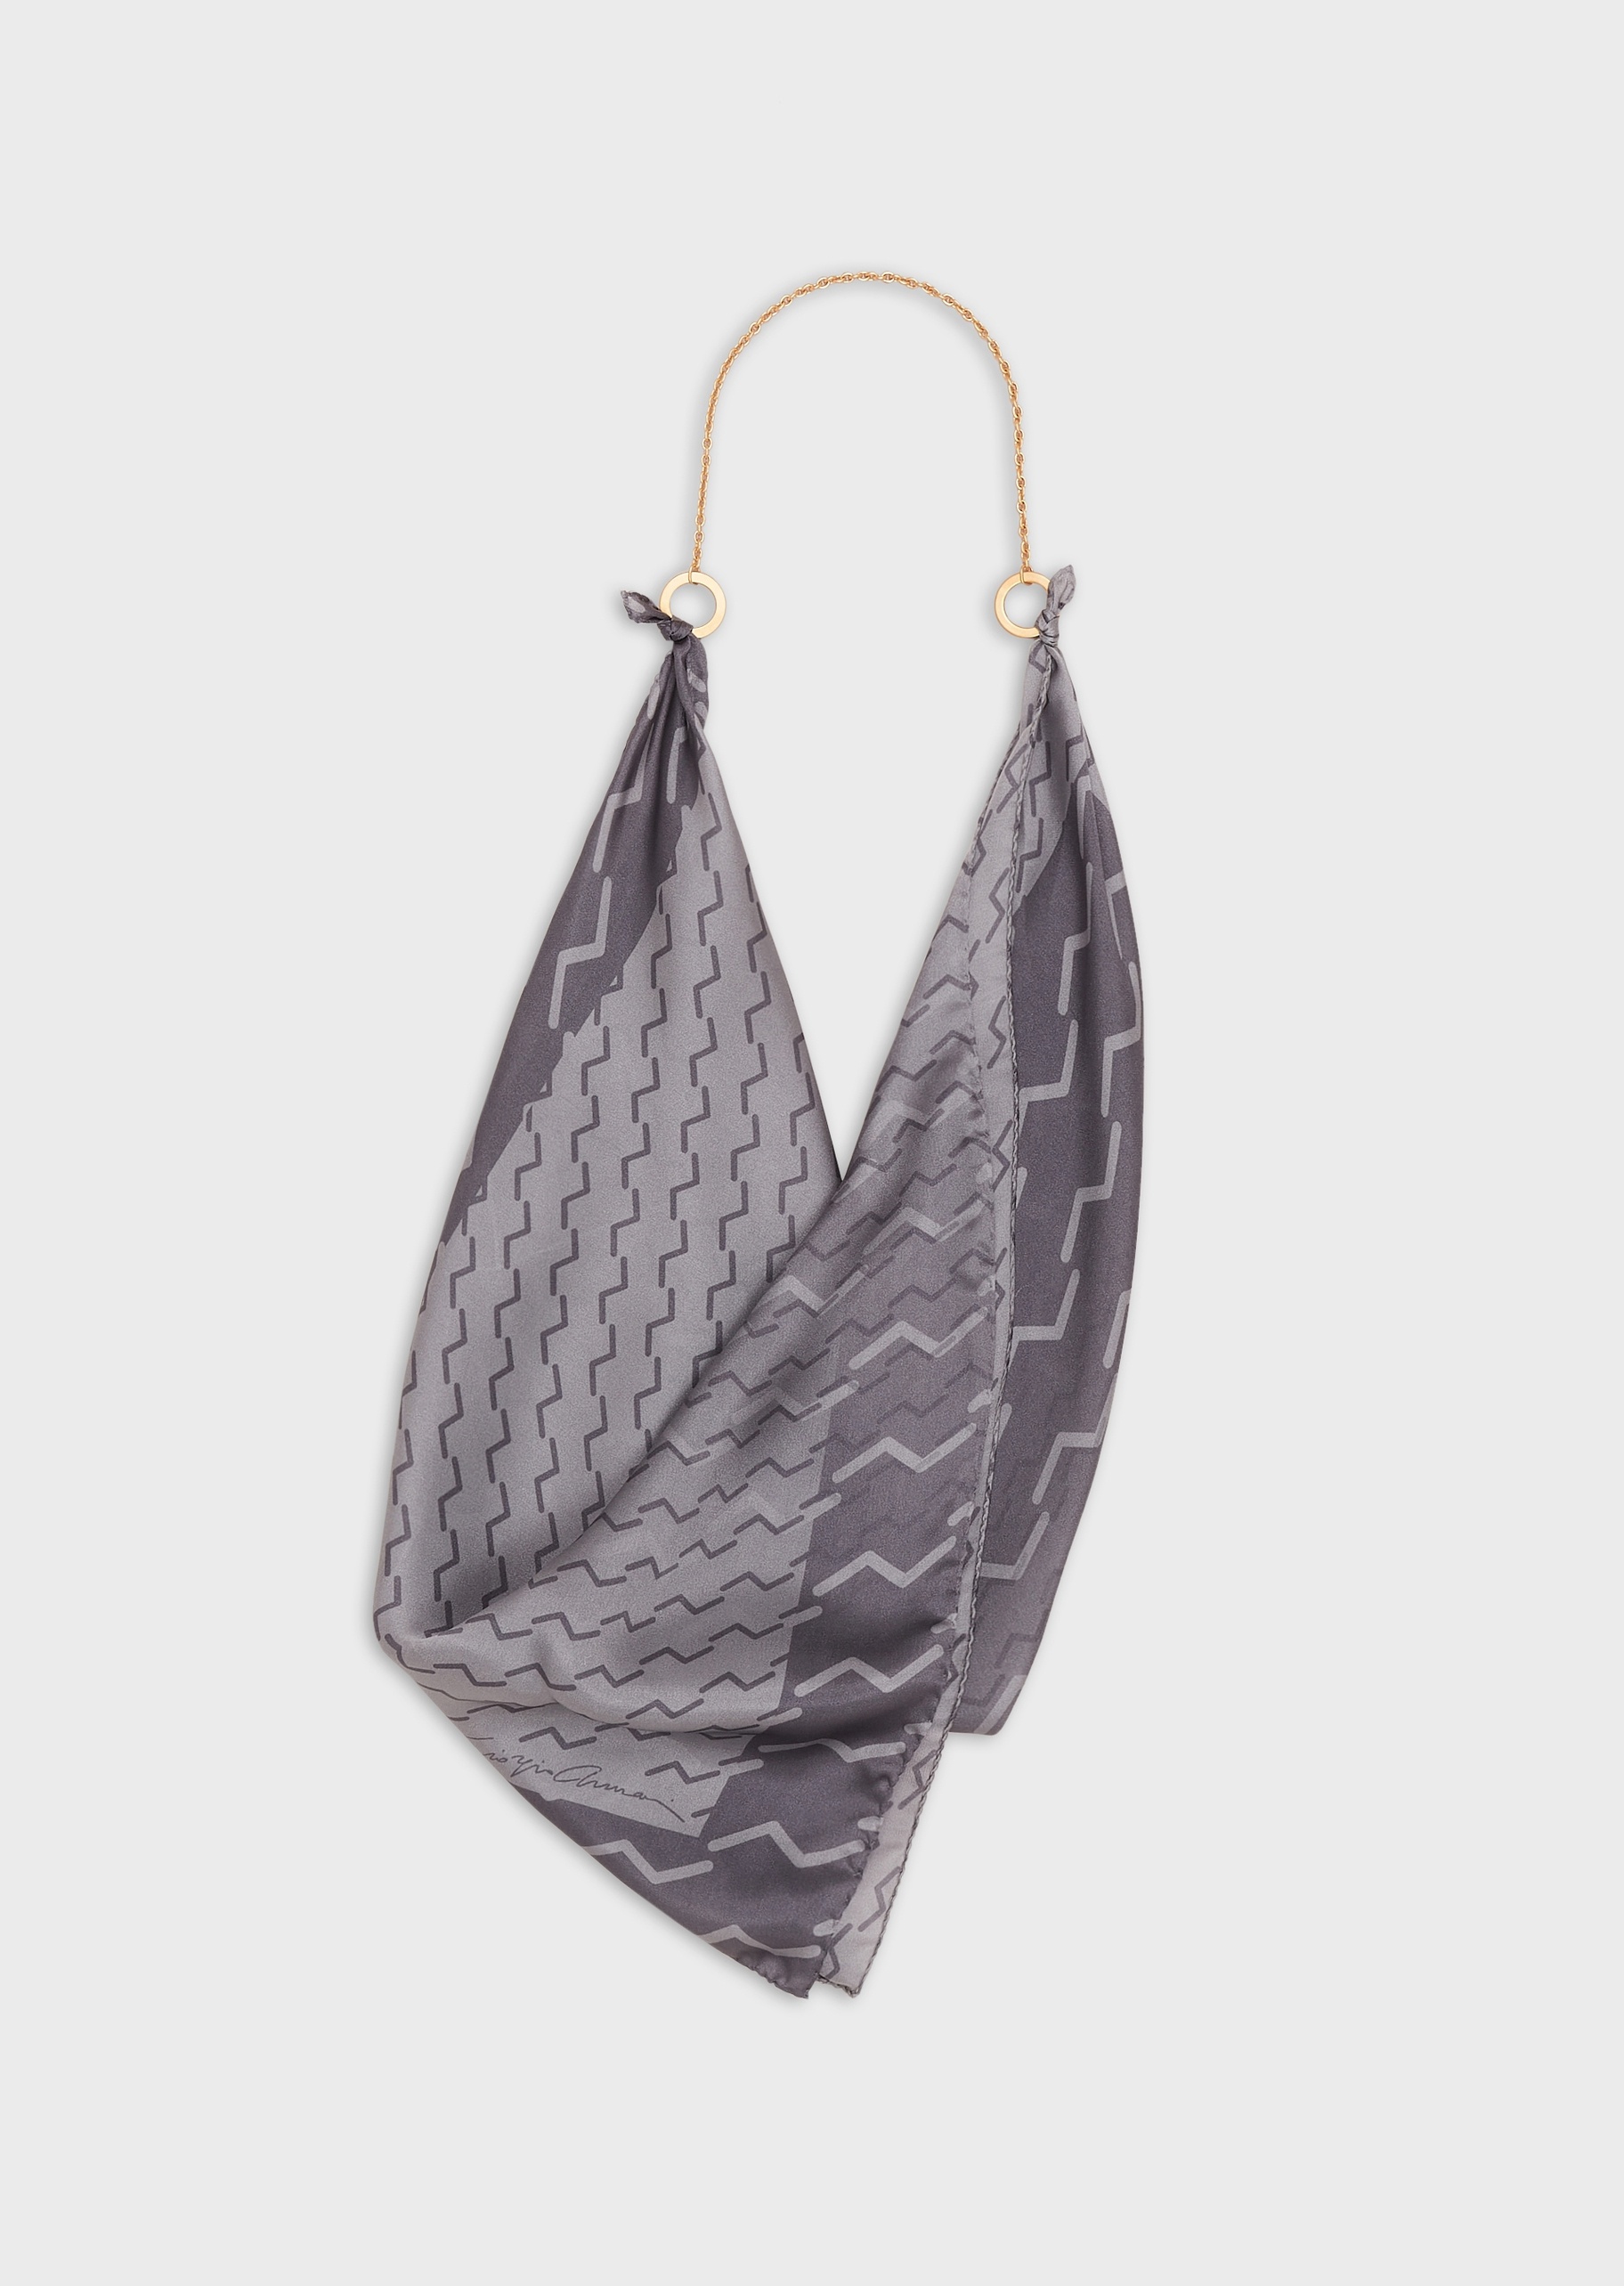 Giorgio Armani 几何风双色印花丝巾